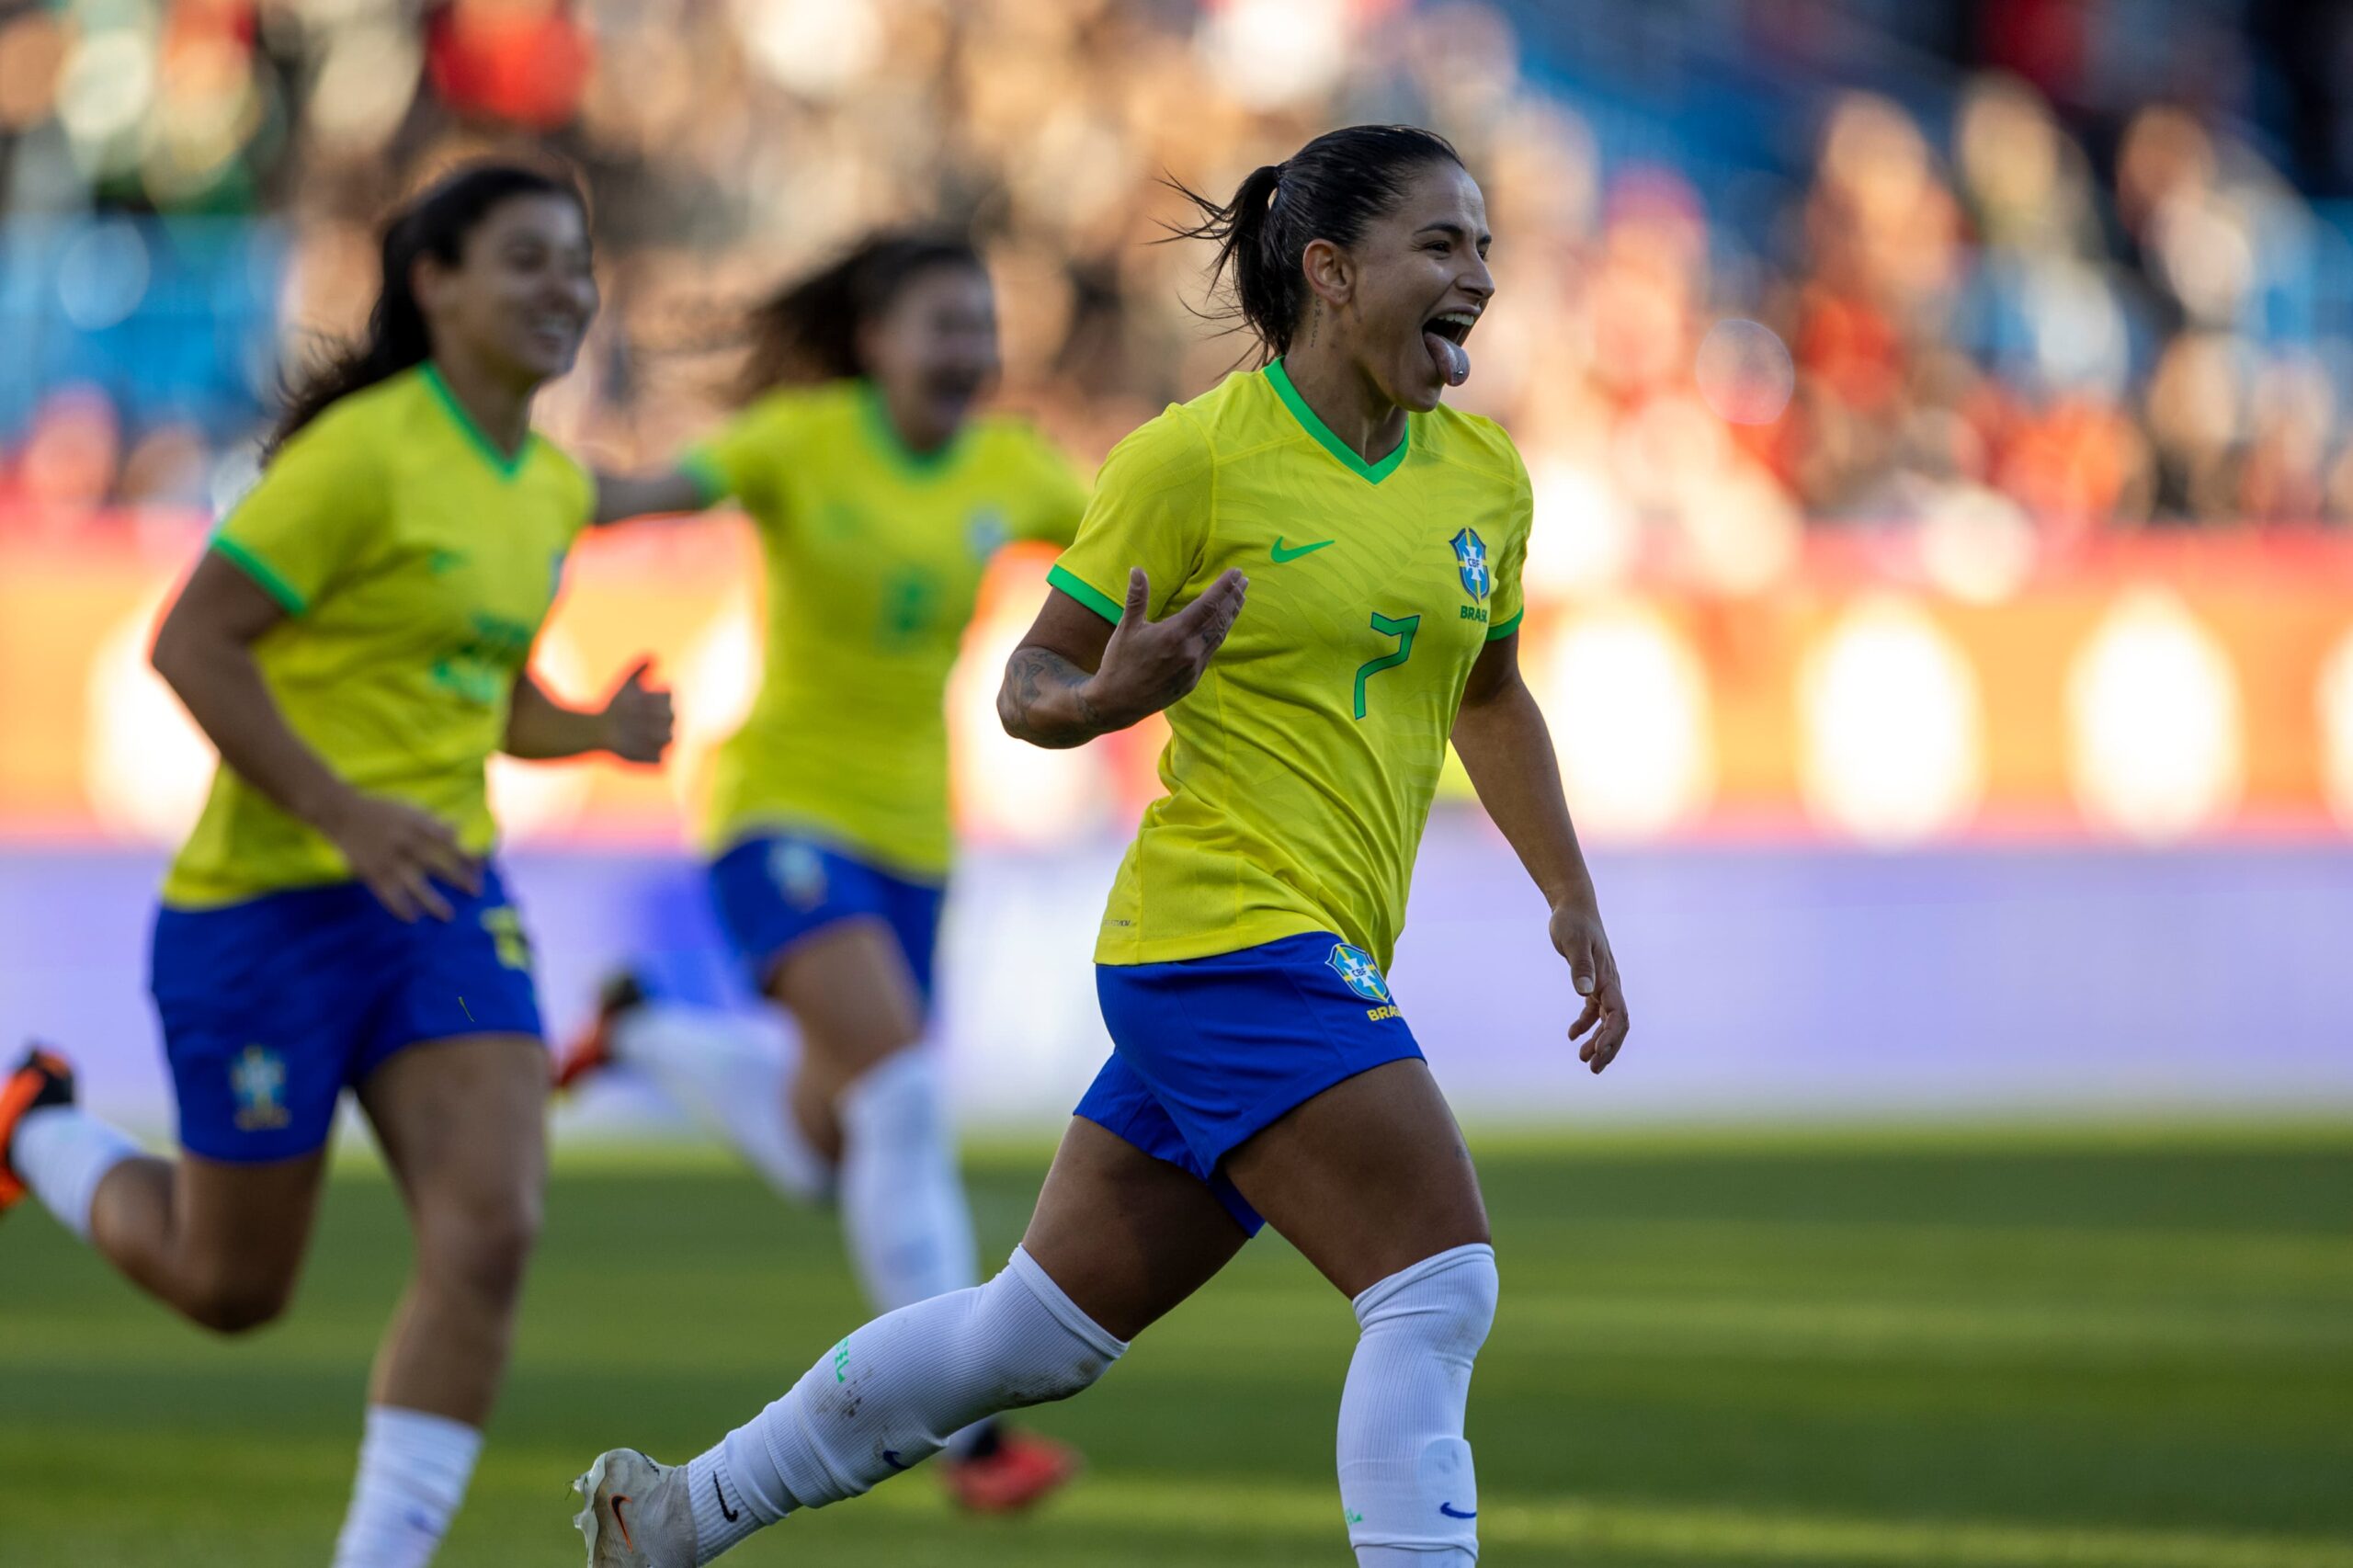 O futebol feminino na mídia - Fut das Minas